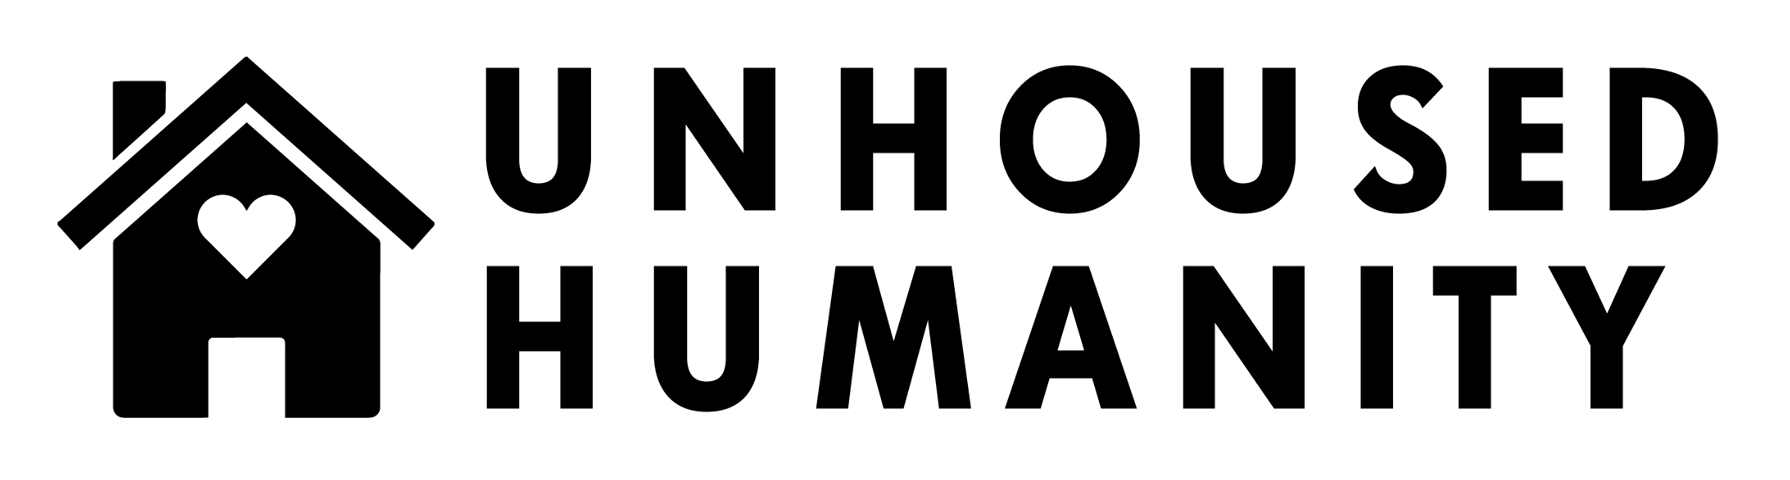 Unhoused Humanity logo